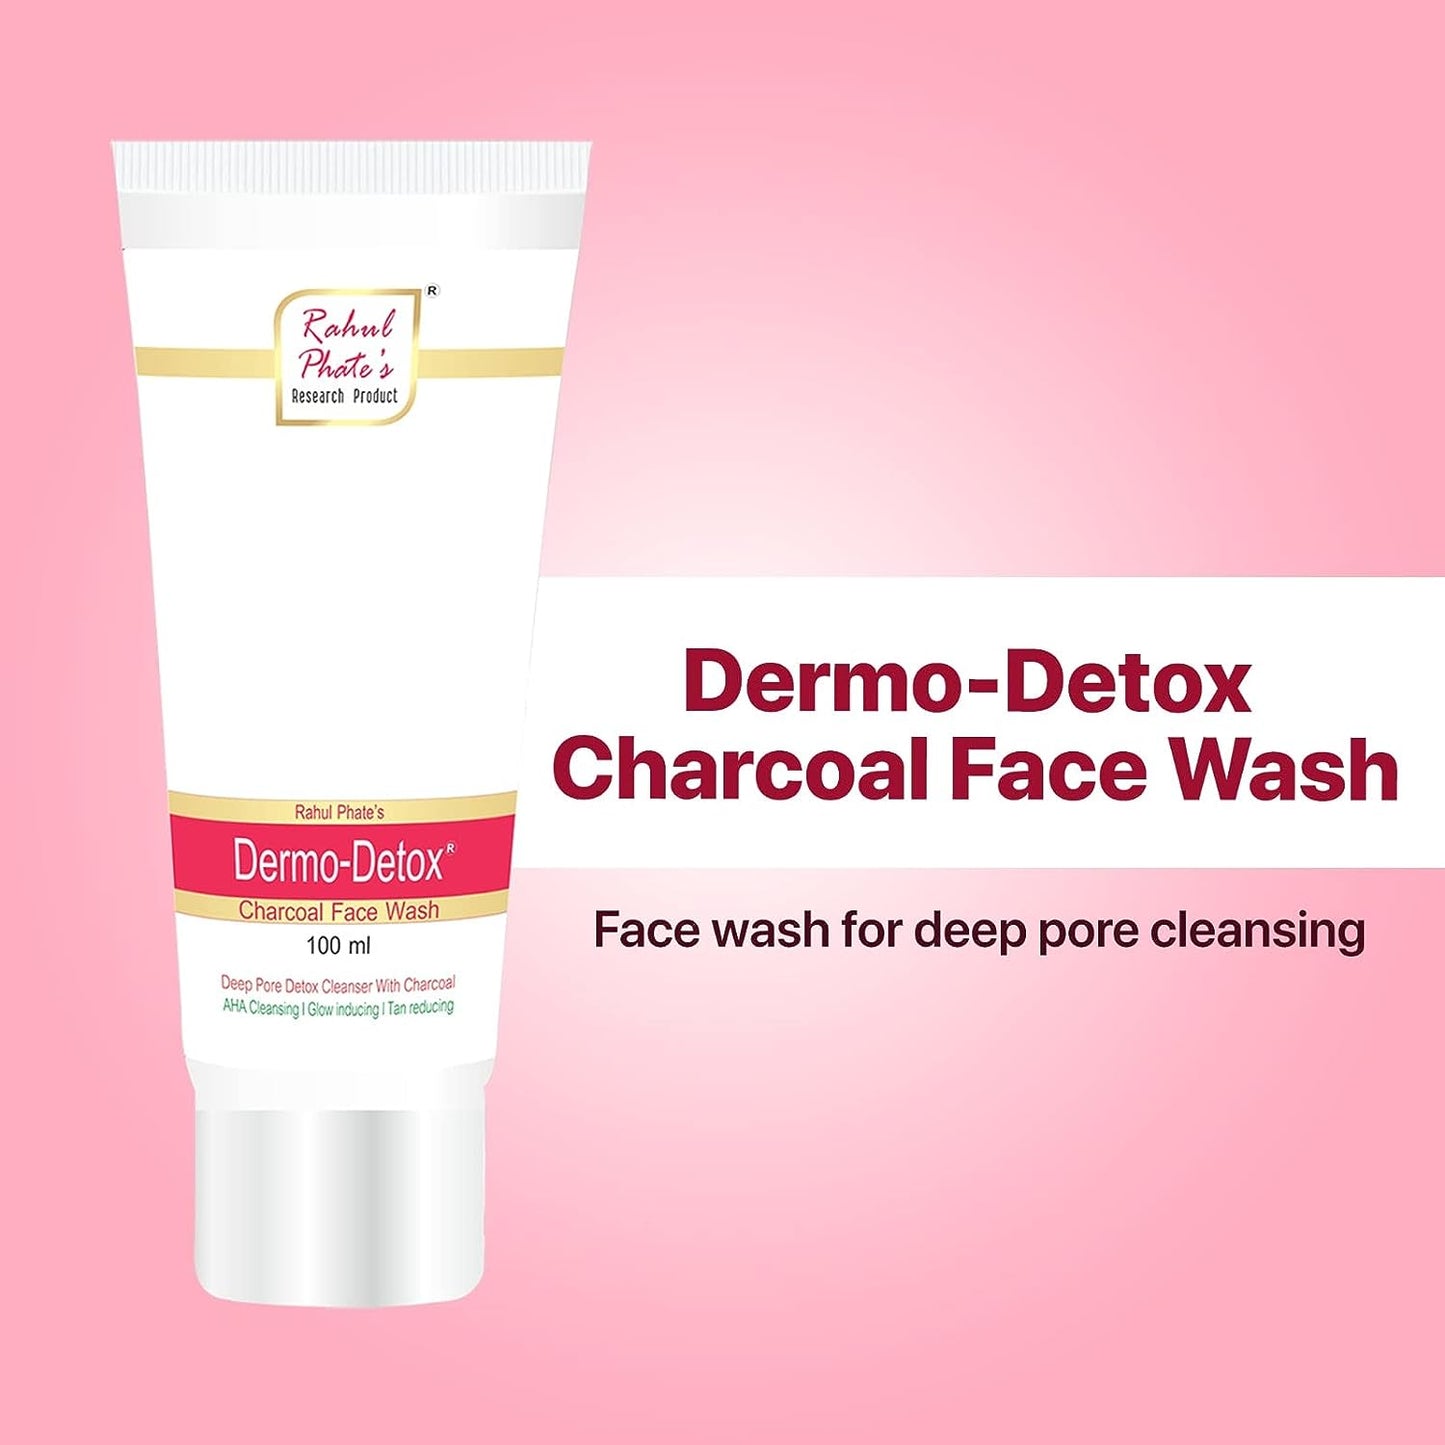 Dermo-detox charcoal face wash - 100 ml